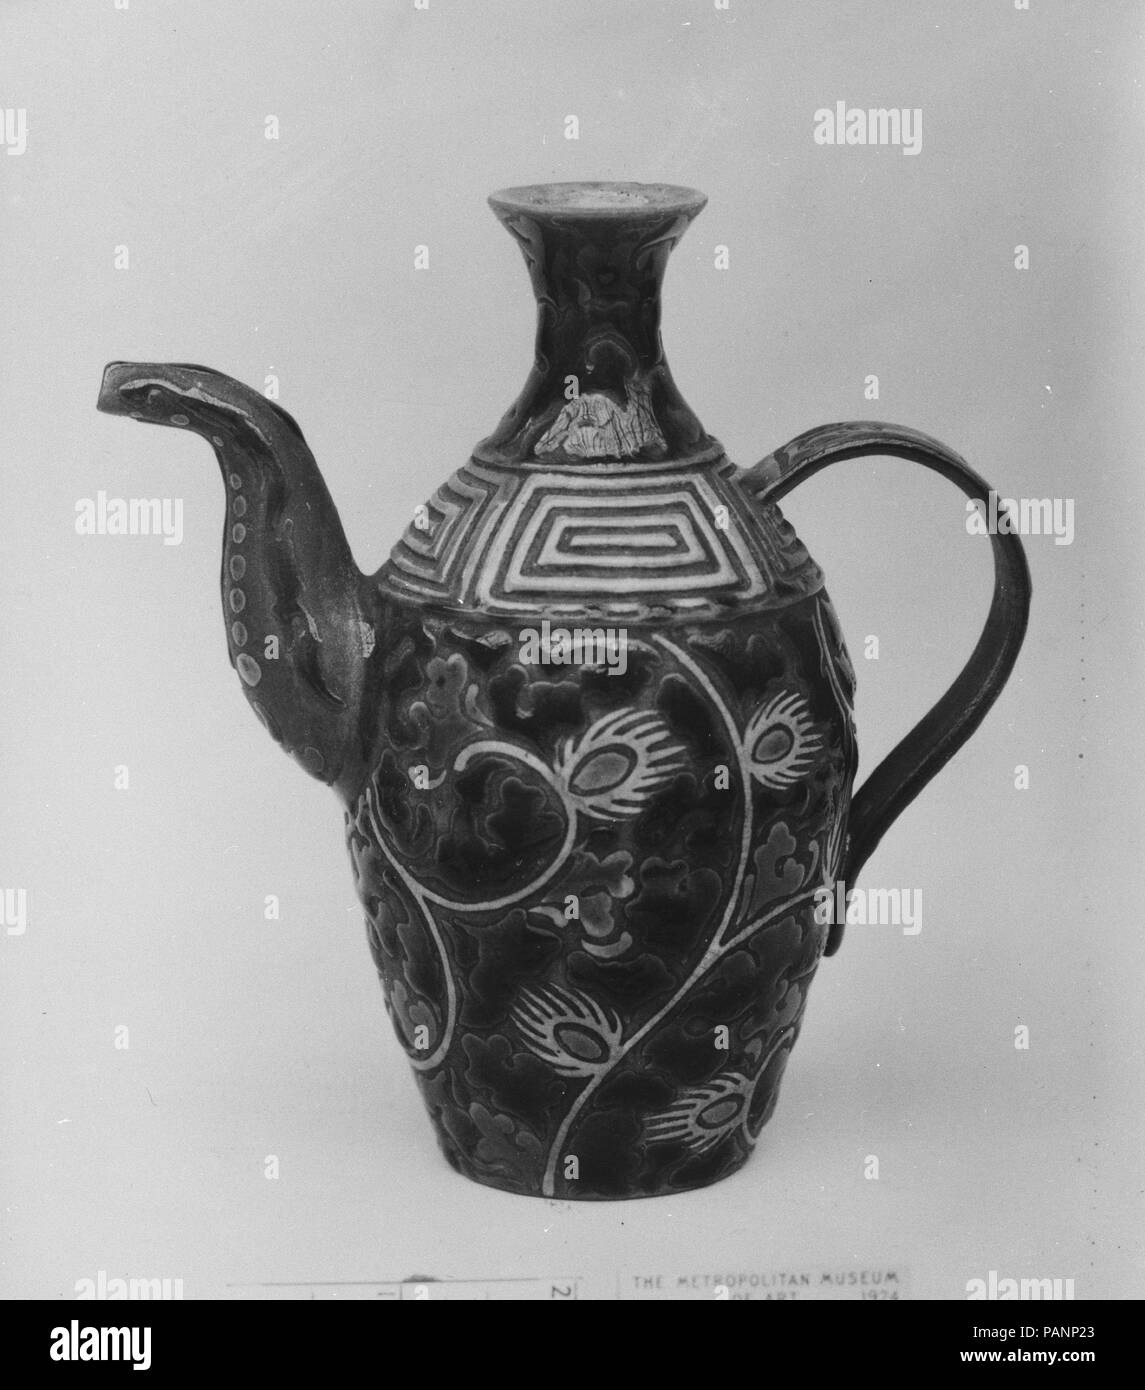 Wine pot. Culture: Japan. Dimensions: H. 6 1/4 in. (15.9 cm); L. 5 13/16 in. (14.8 cm). Date: 1790. Museum: Metropolitan Museum of Art, New York, USA. Stock Photo